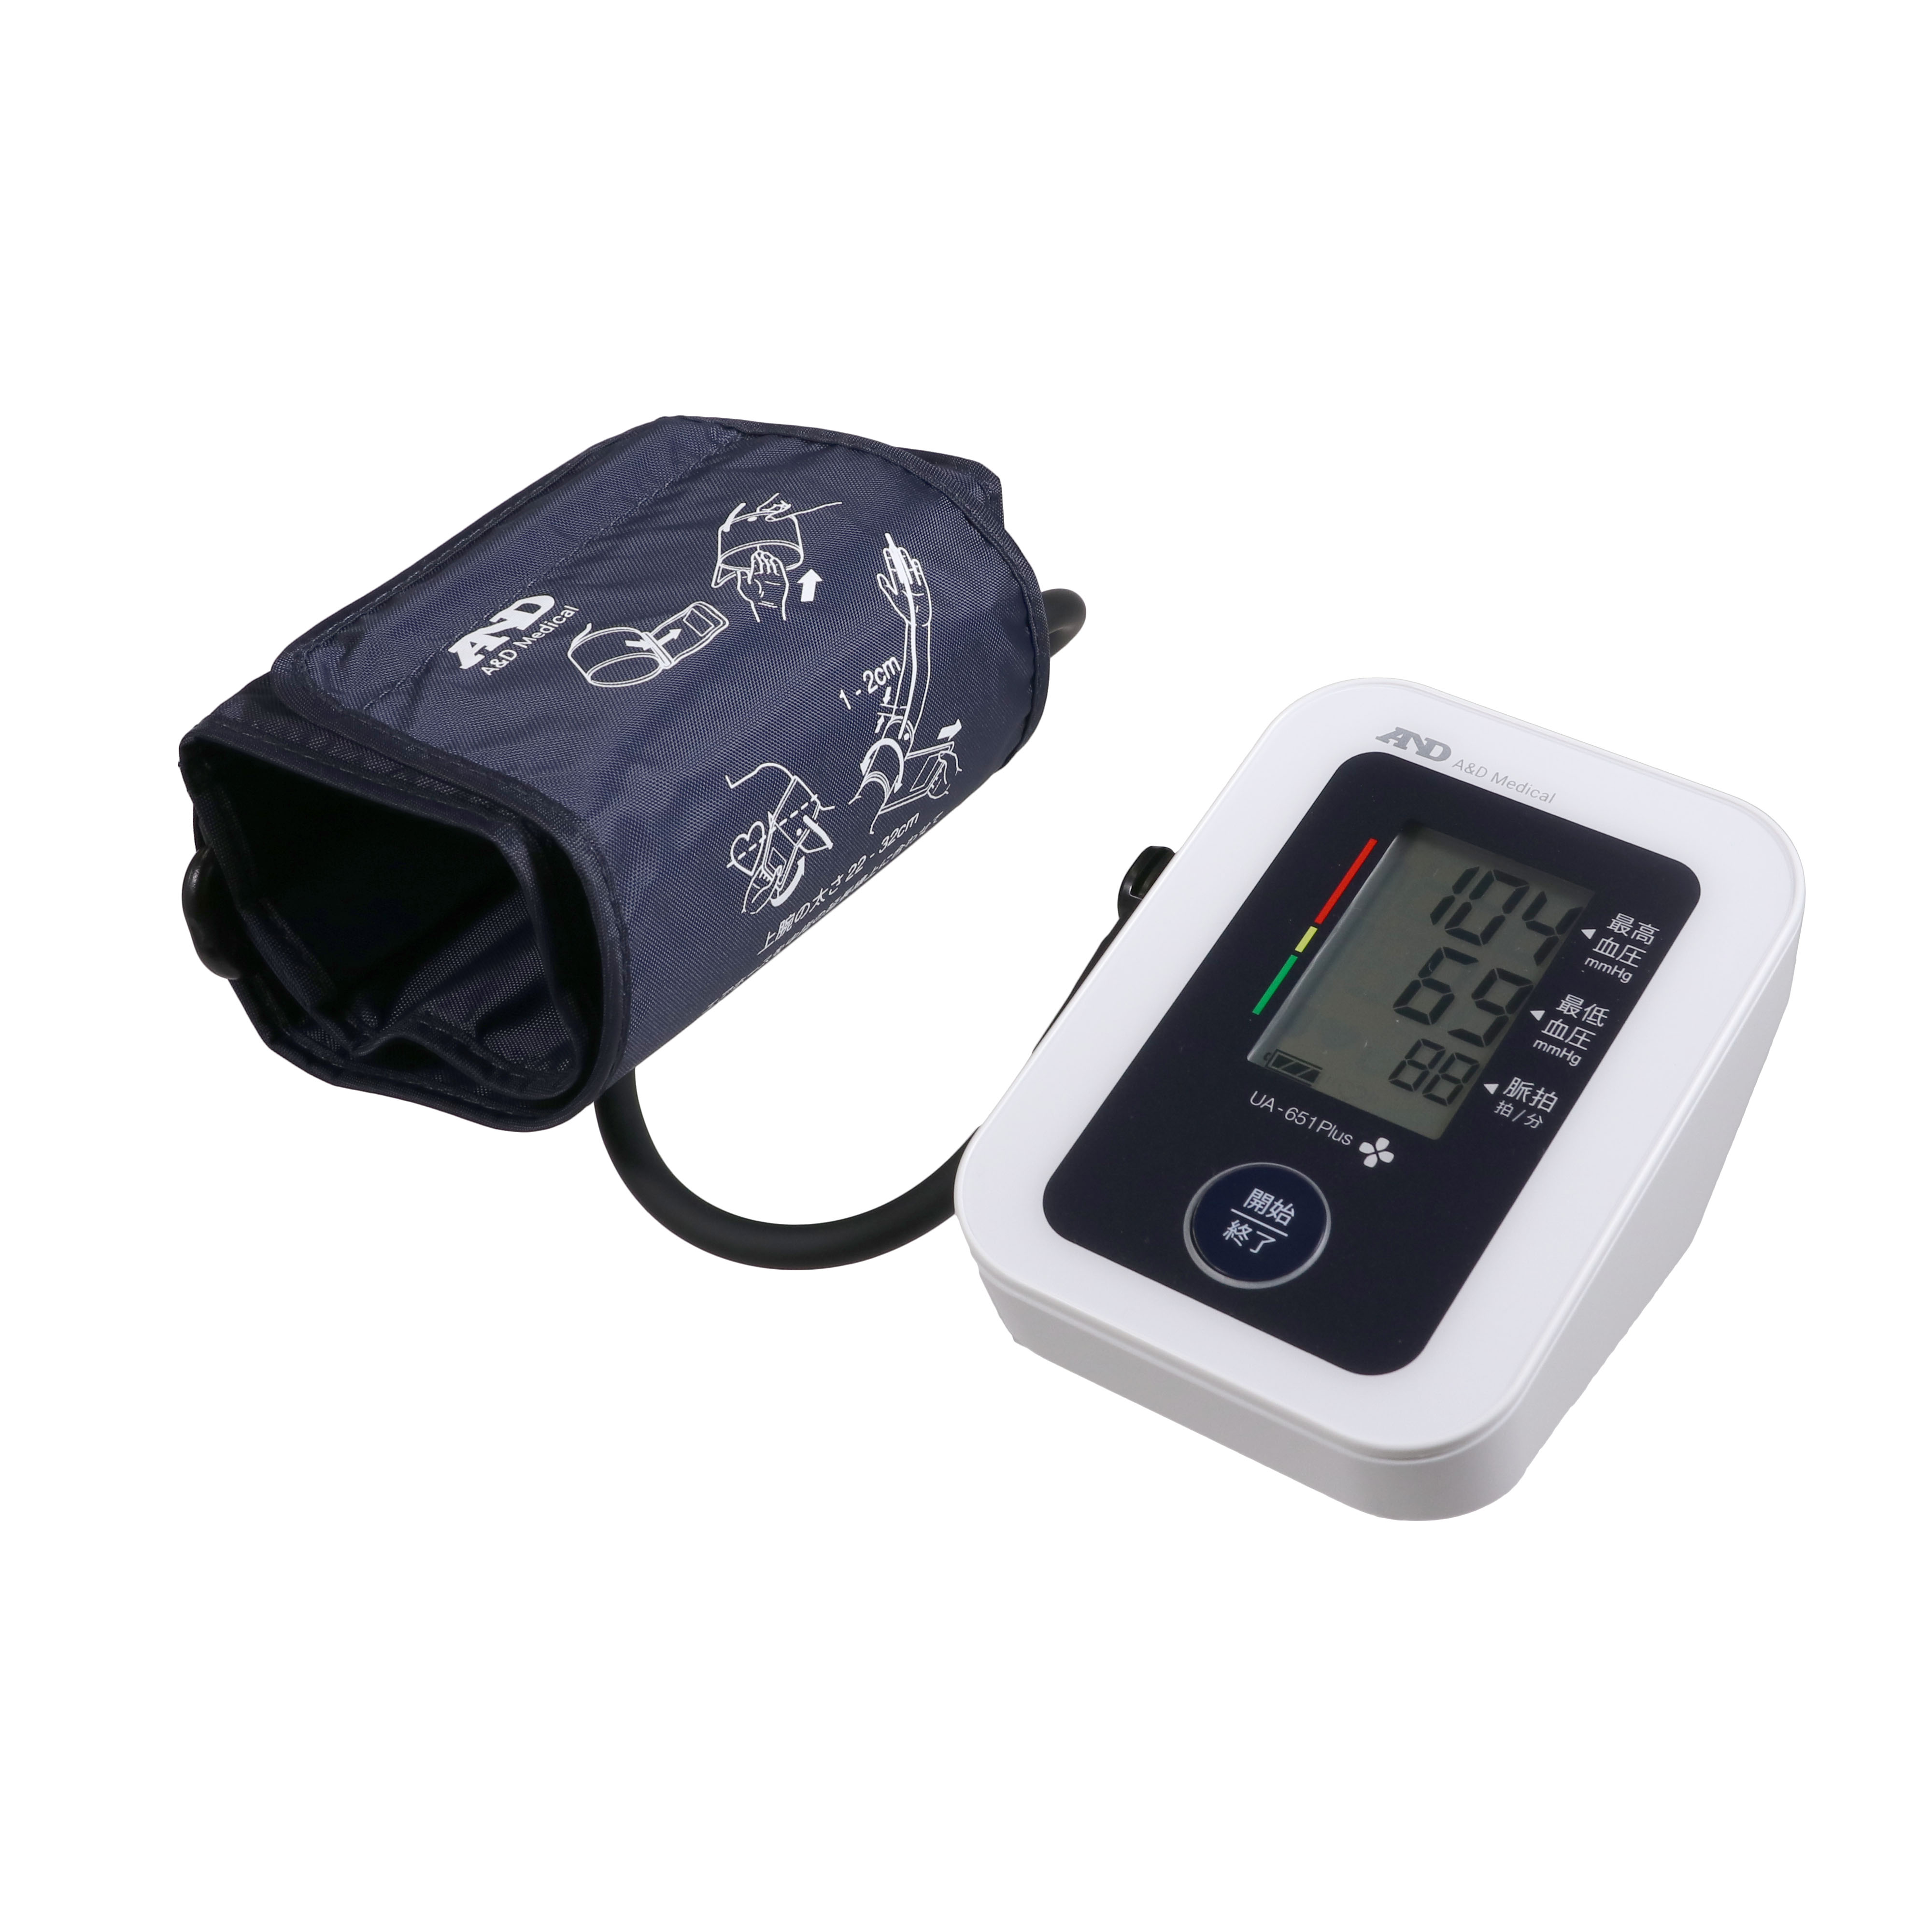 日本精密測器｜NISSEI 血圧計 DS-G10J [上腕（カフ）式]